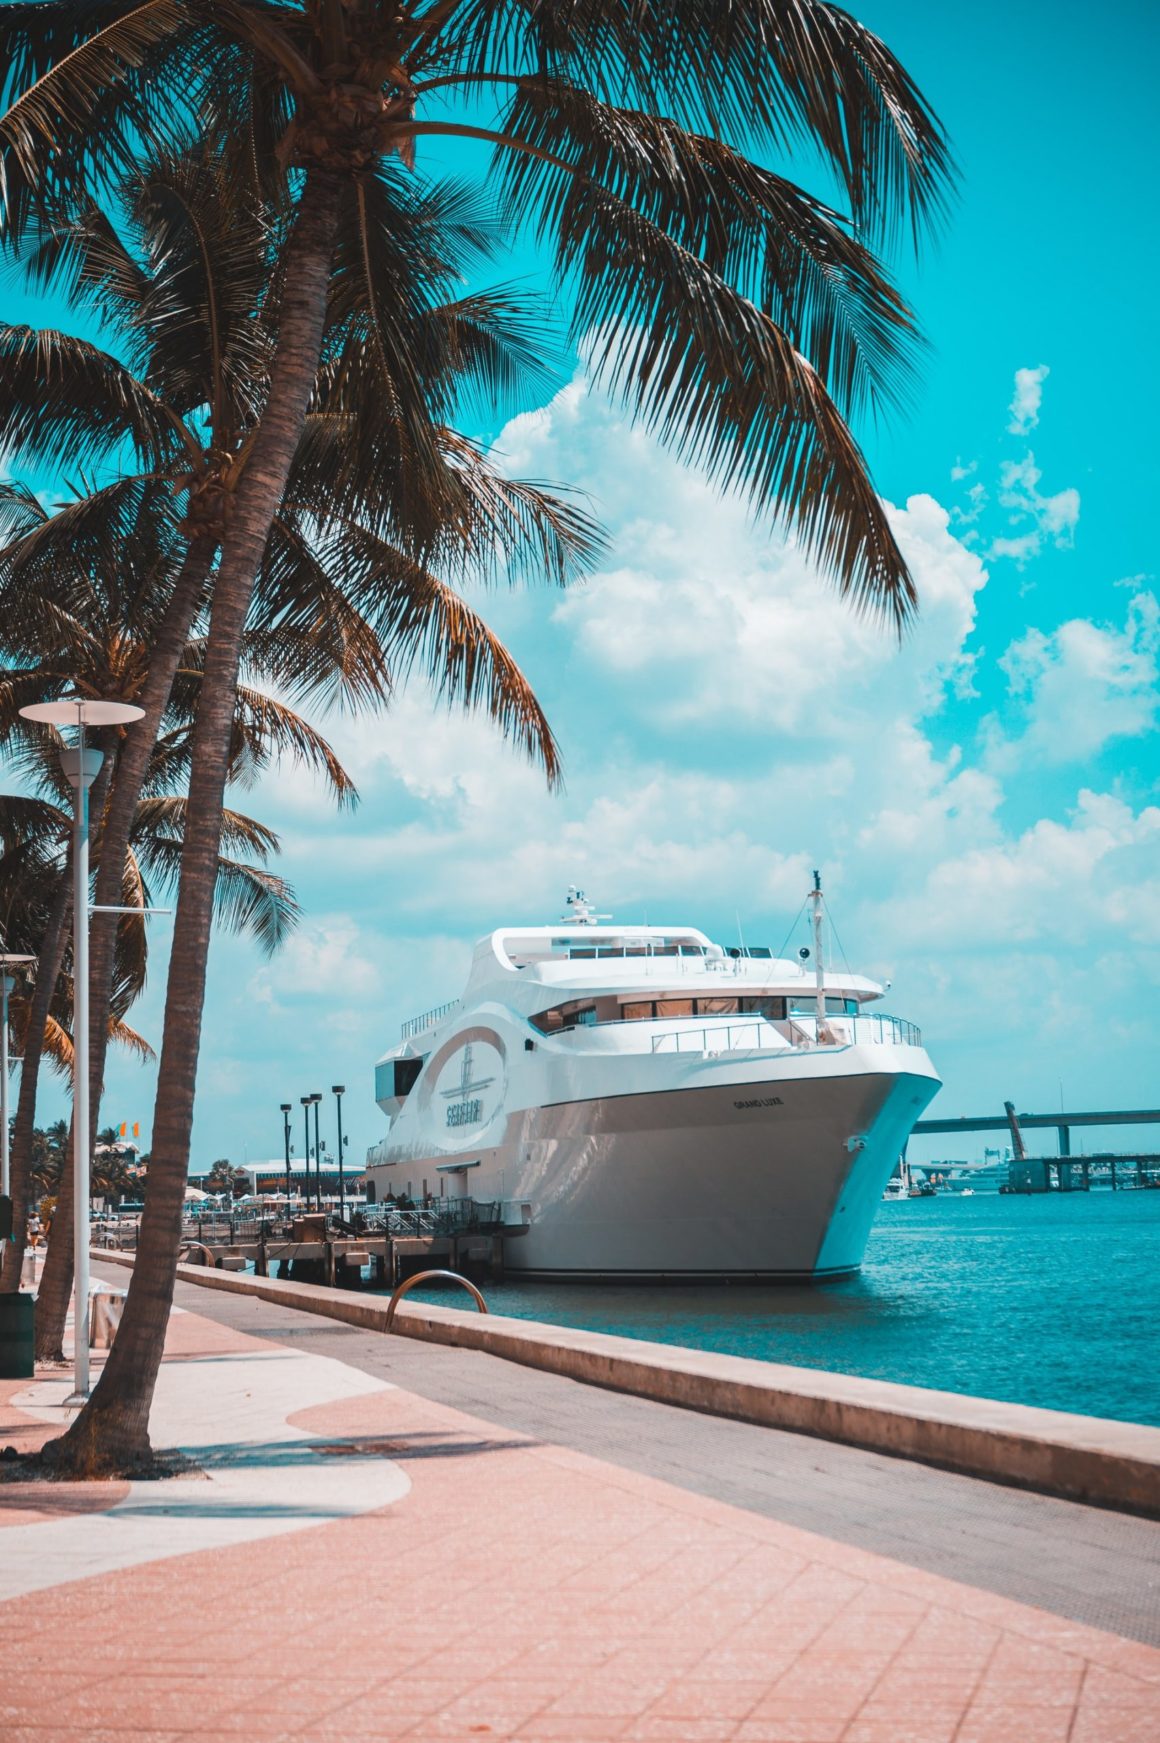 Mega yacht docked with palm trees